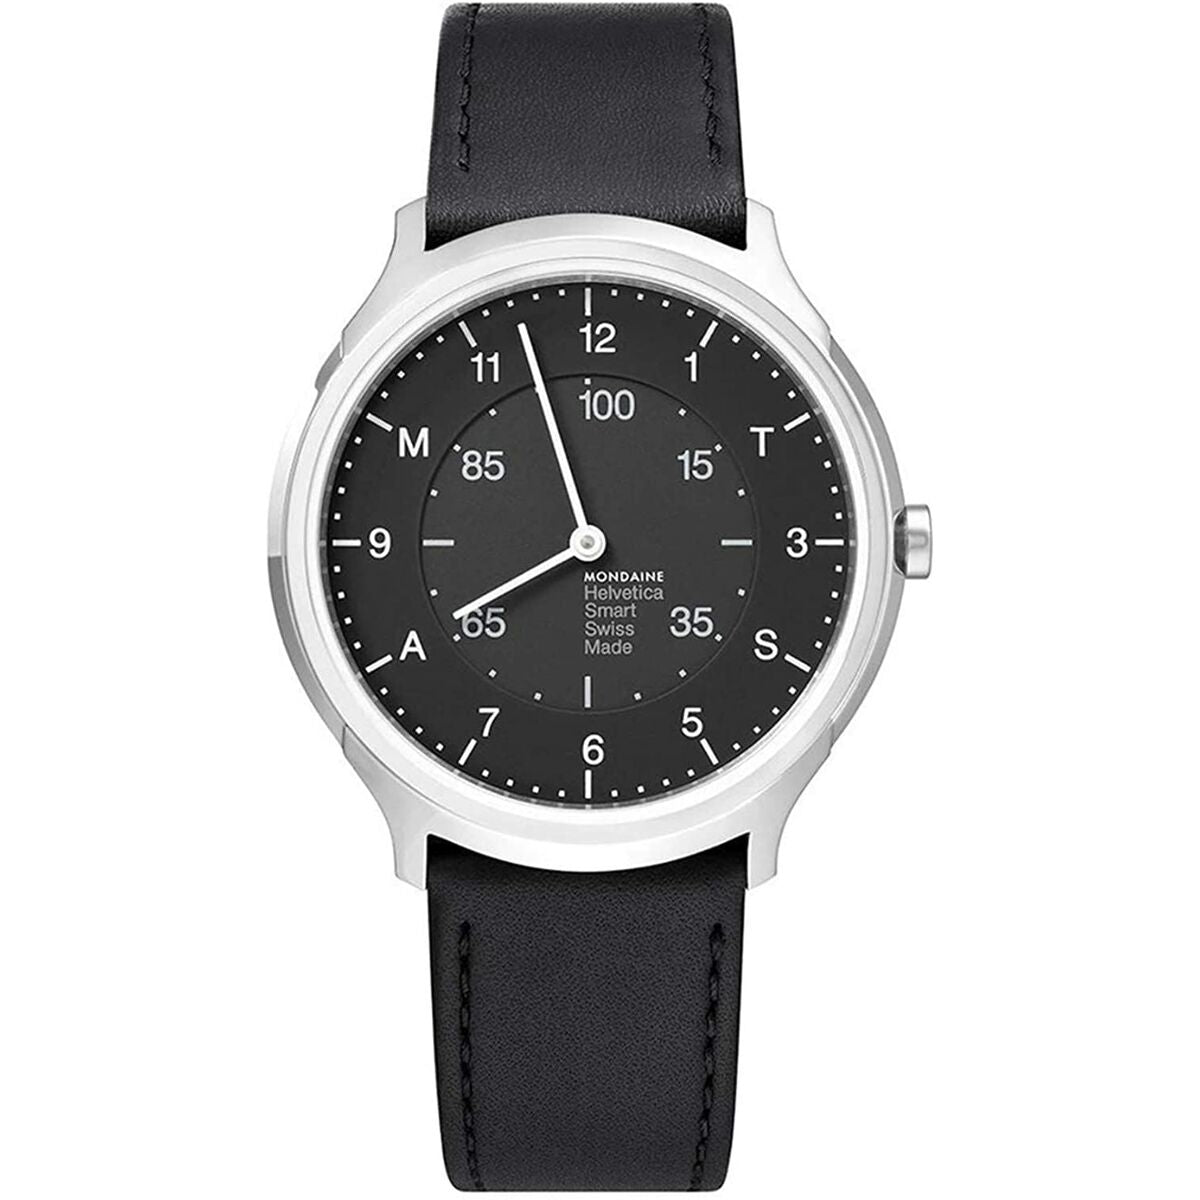 Kaufe Smartwatch Mondaine HELVETICA bei AWK Flagship um € 305.00